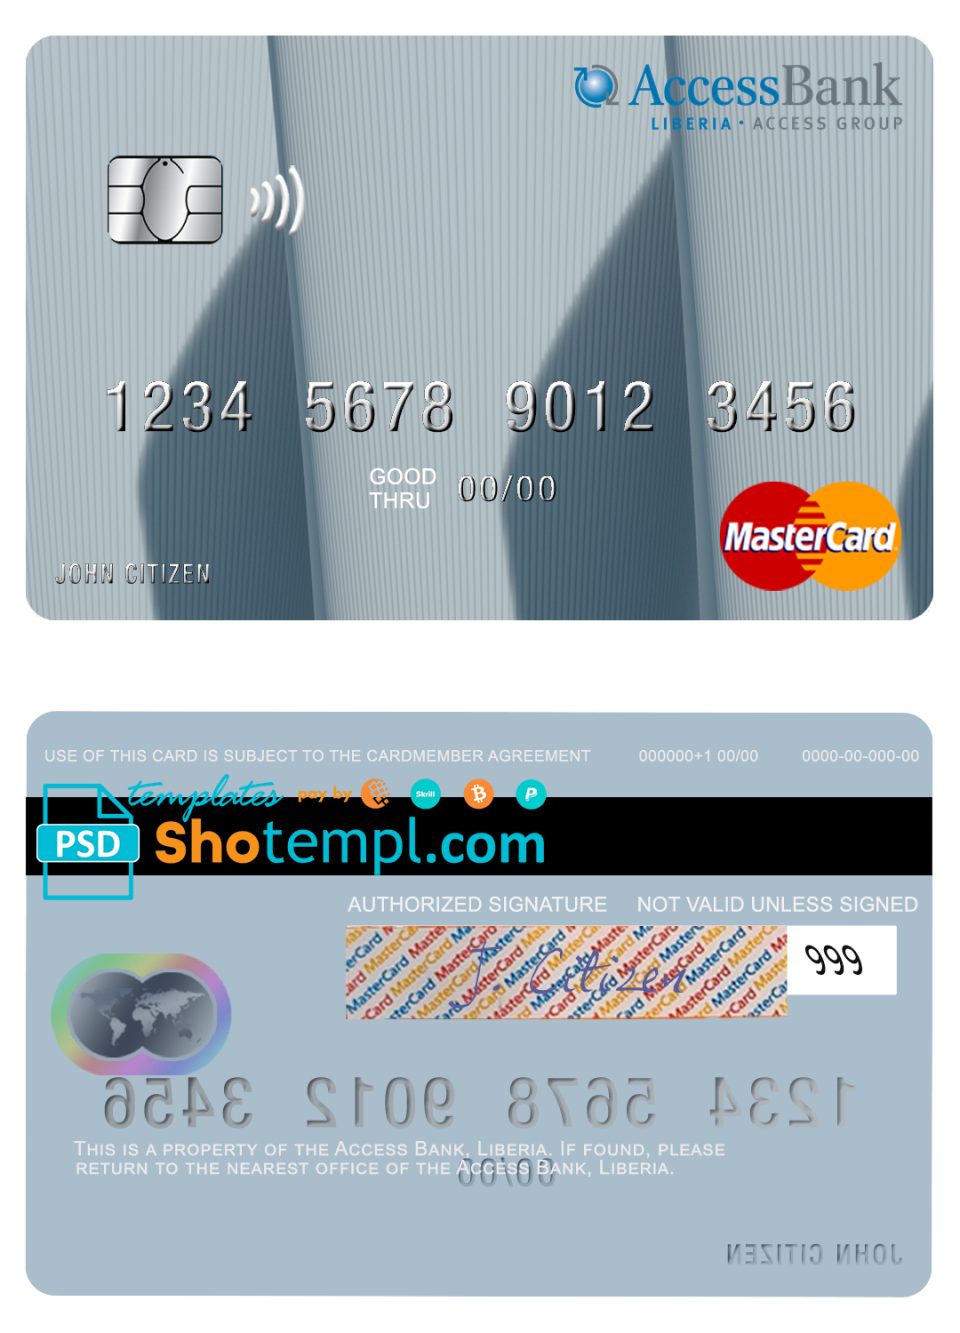 Editable Liberia Access Bank mastercard Templates in PSD Format